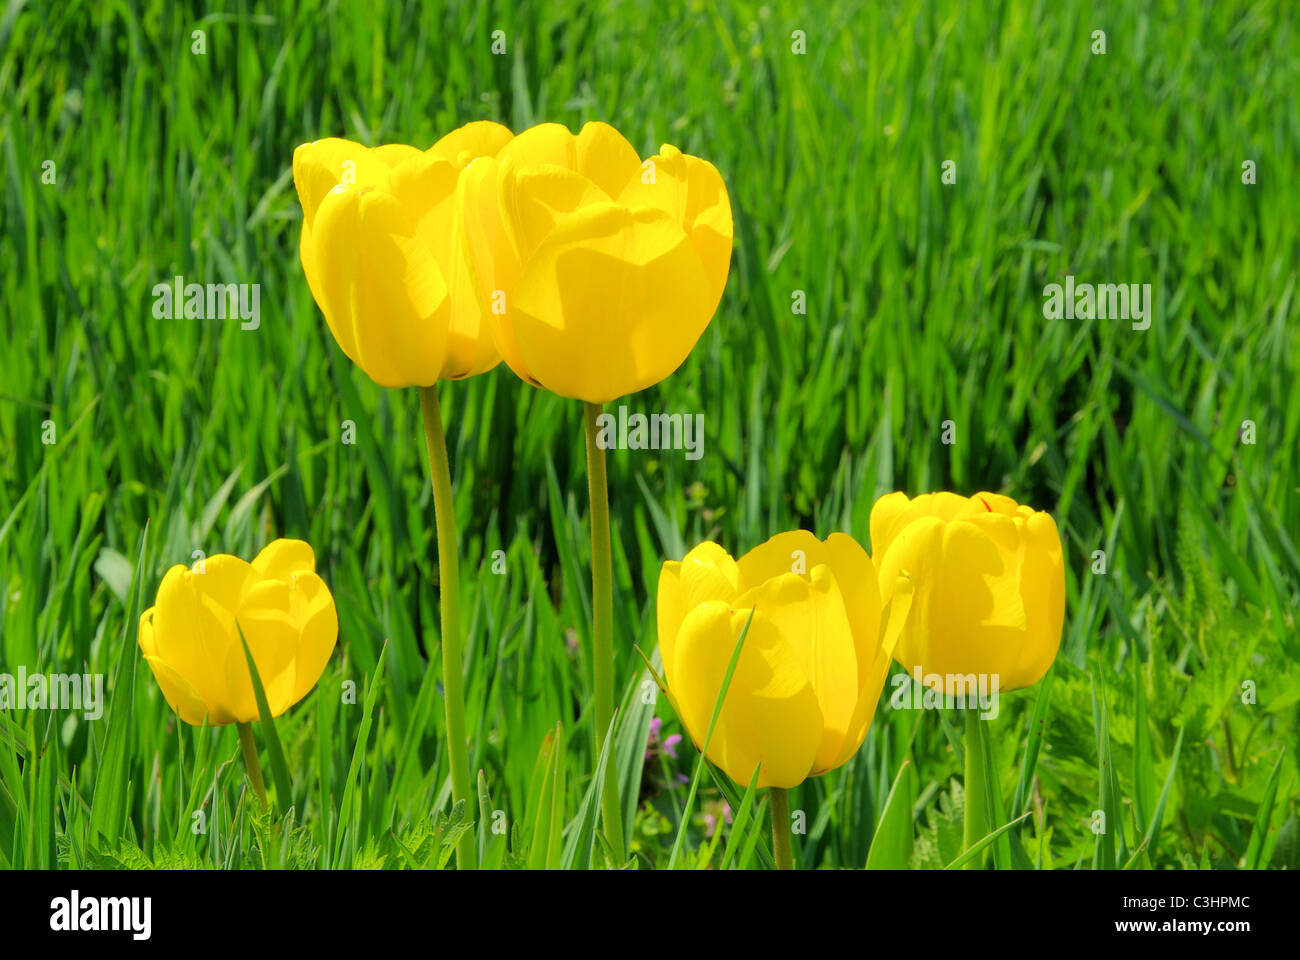 Tulpe gelb - tulip yellow 06 Stock Photo